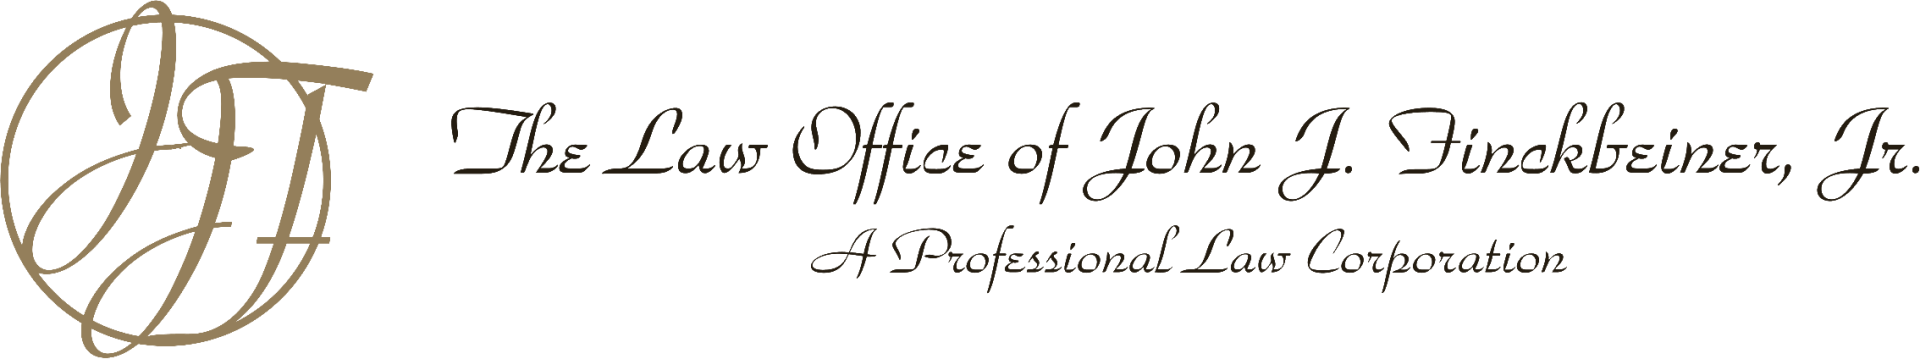 The Law Office Of John J. Finckbeiner, JR.